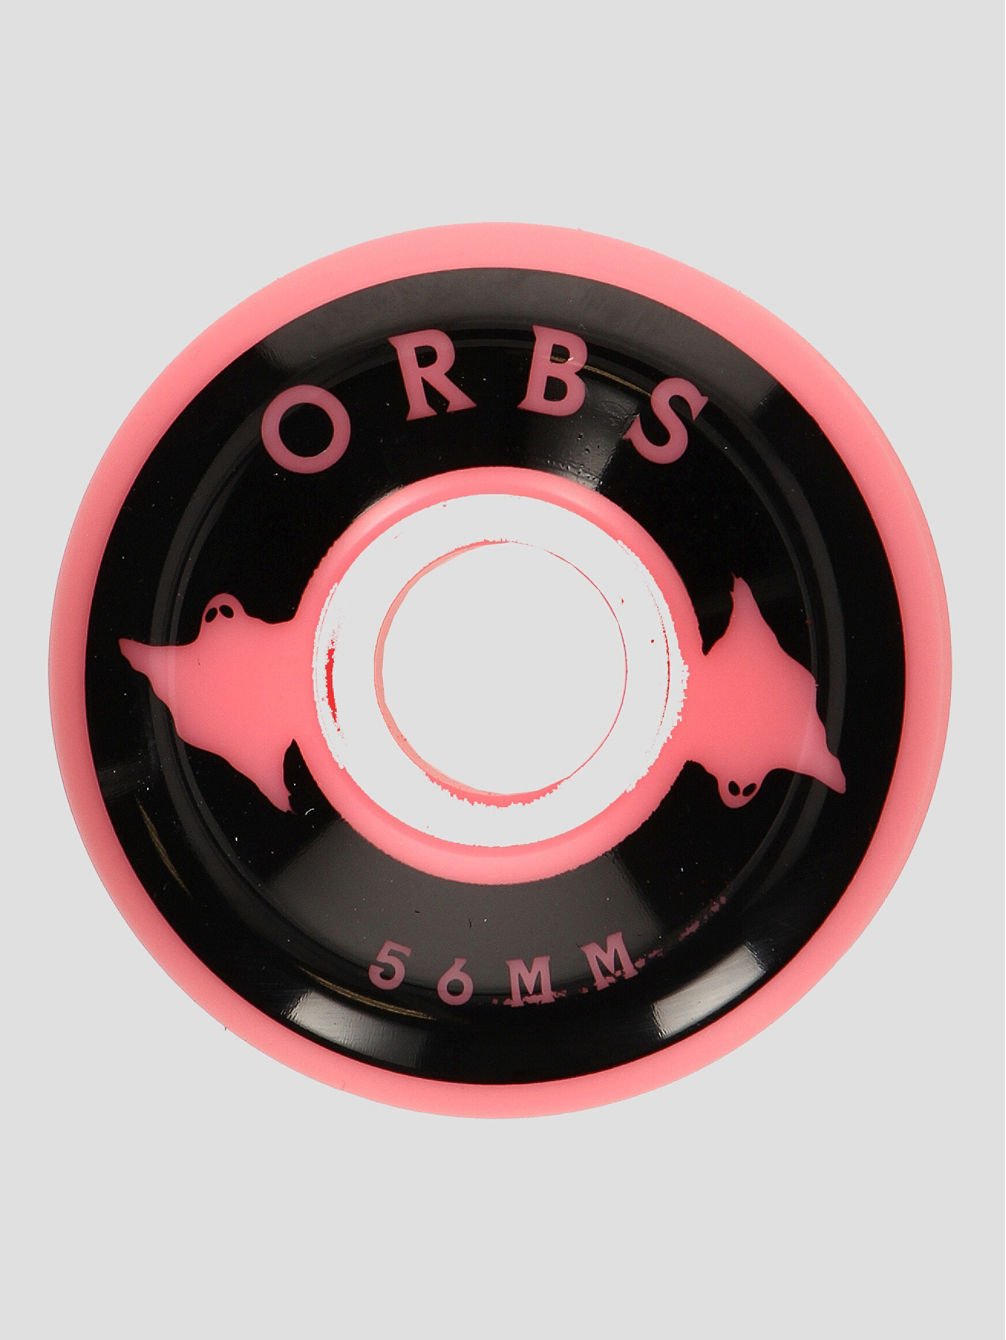 Orbs Specters - Conical - 99A 56mm Kolecka